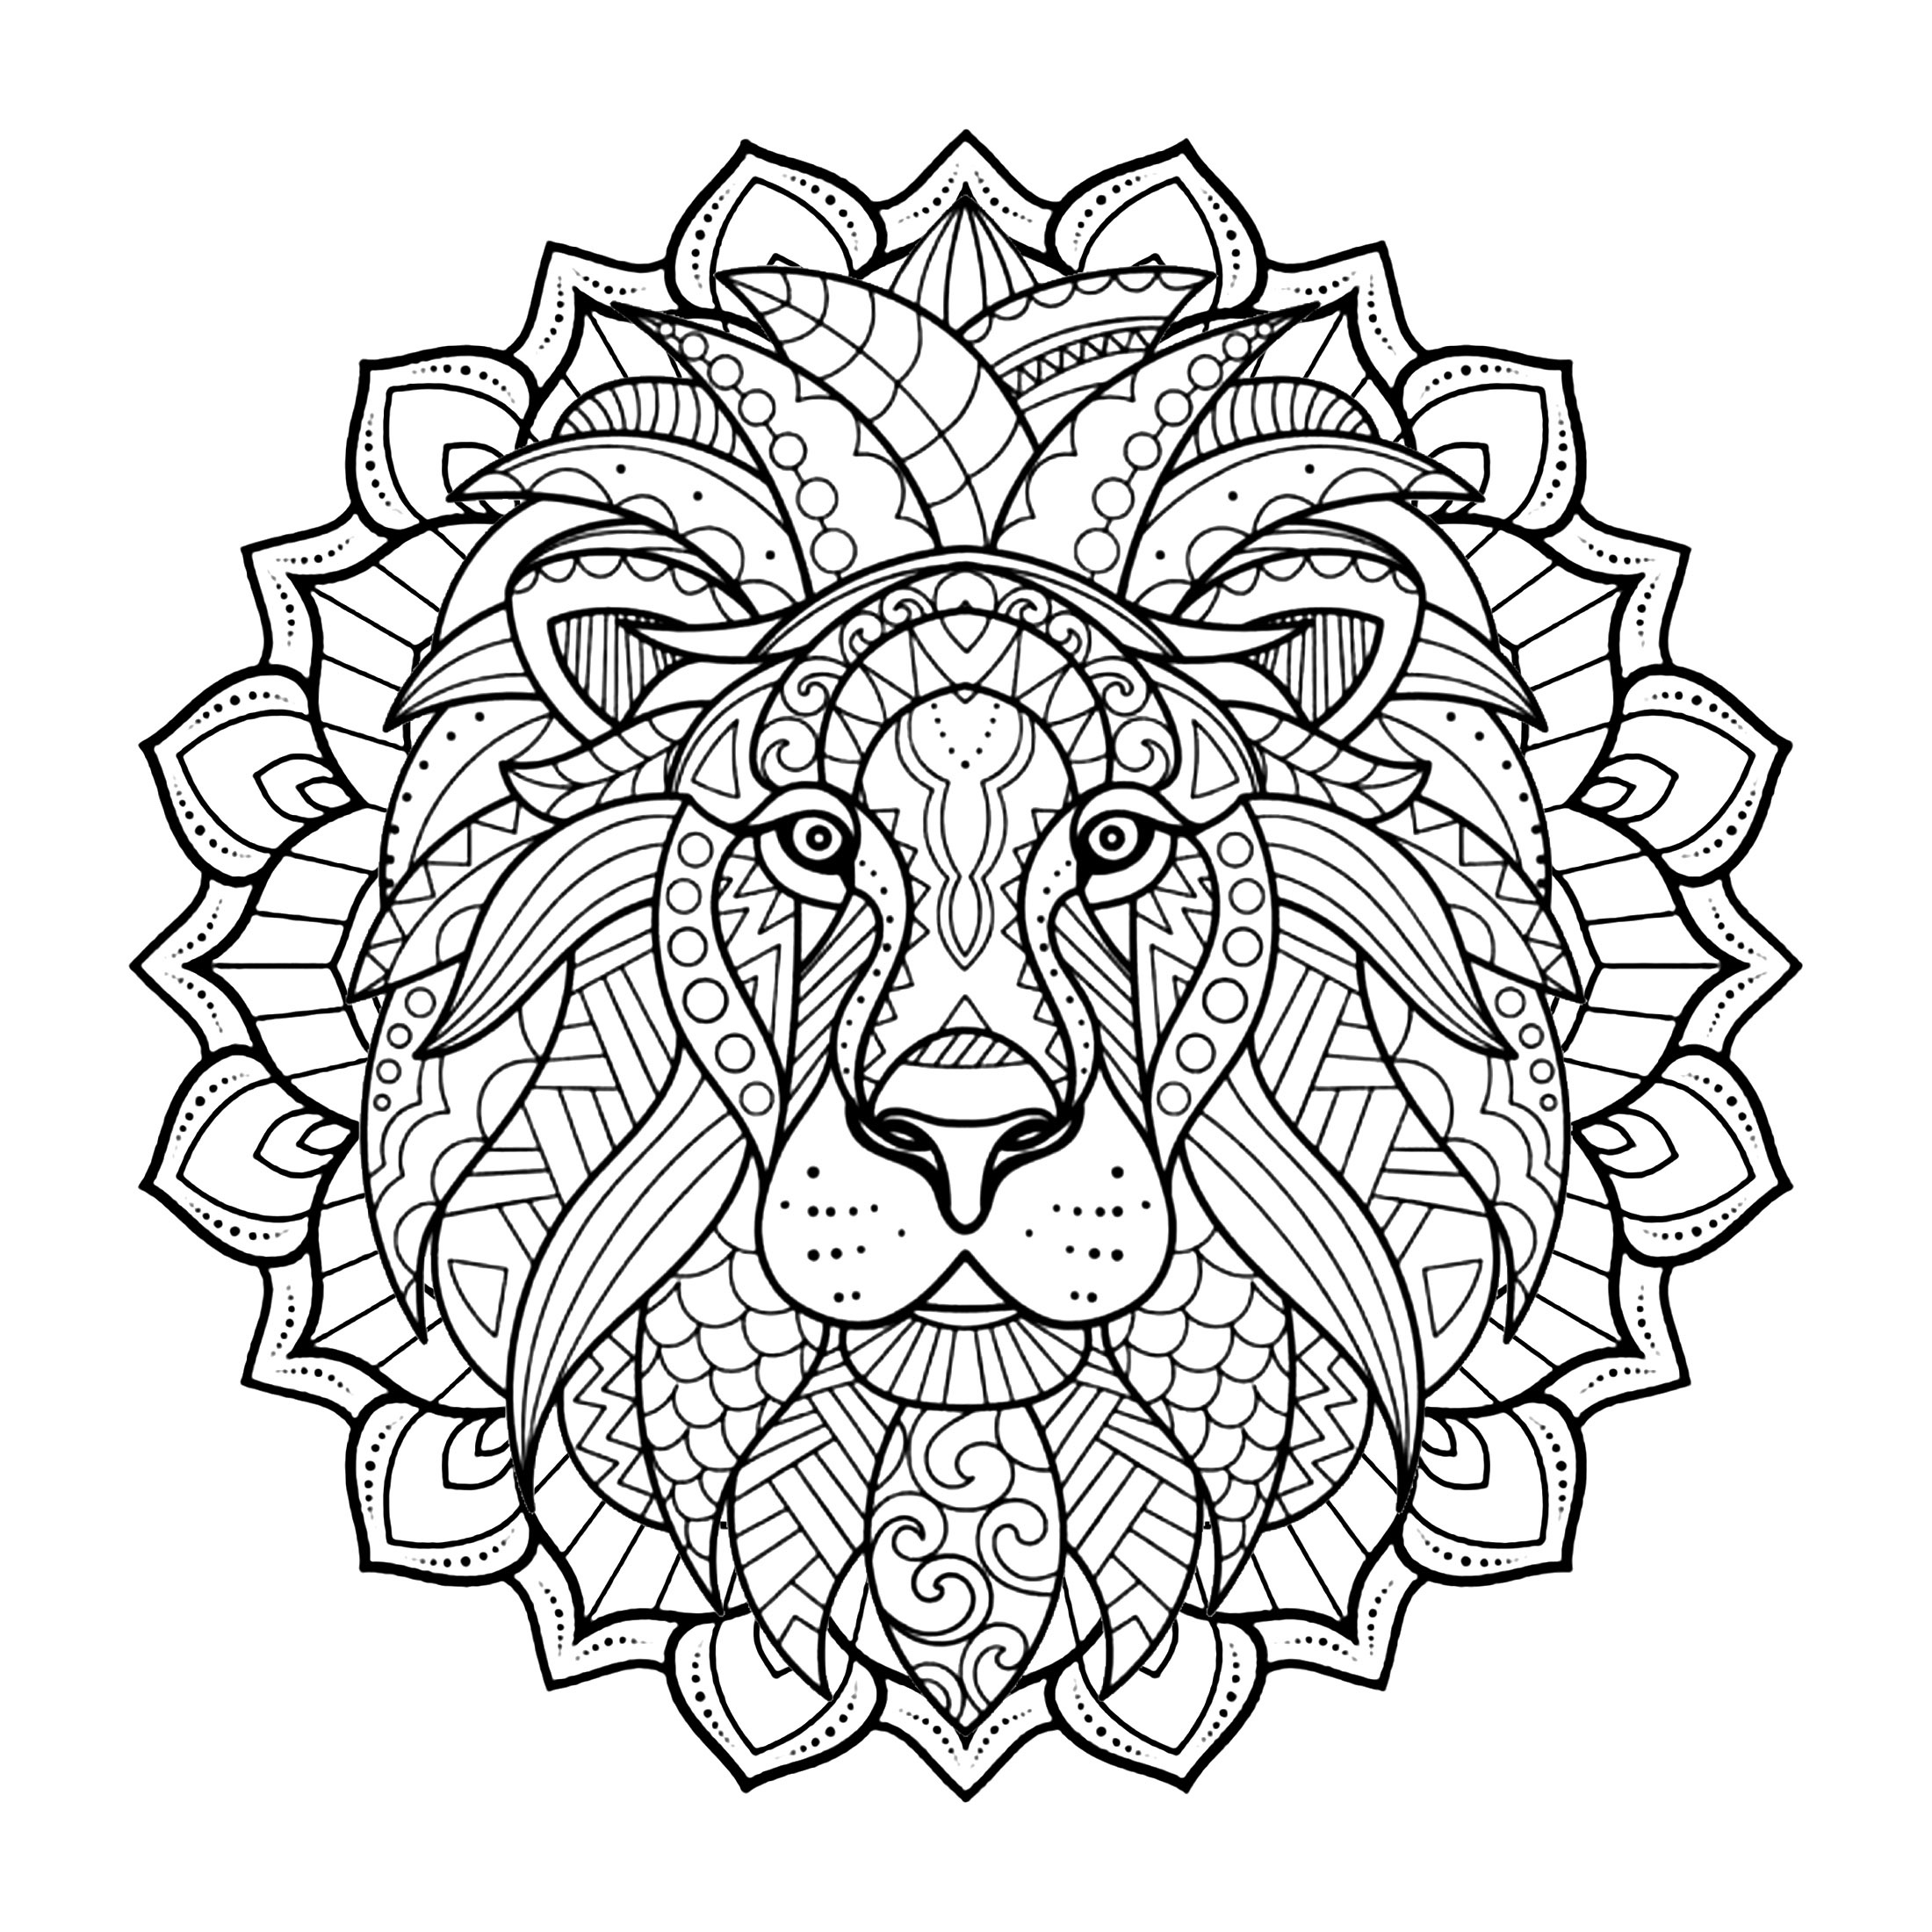 Mandala Löwe. Prächtiger Löwenkopf integriert in ein Mandala